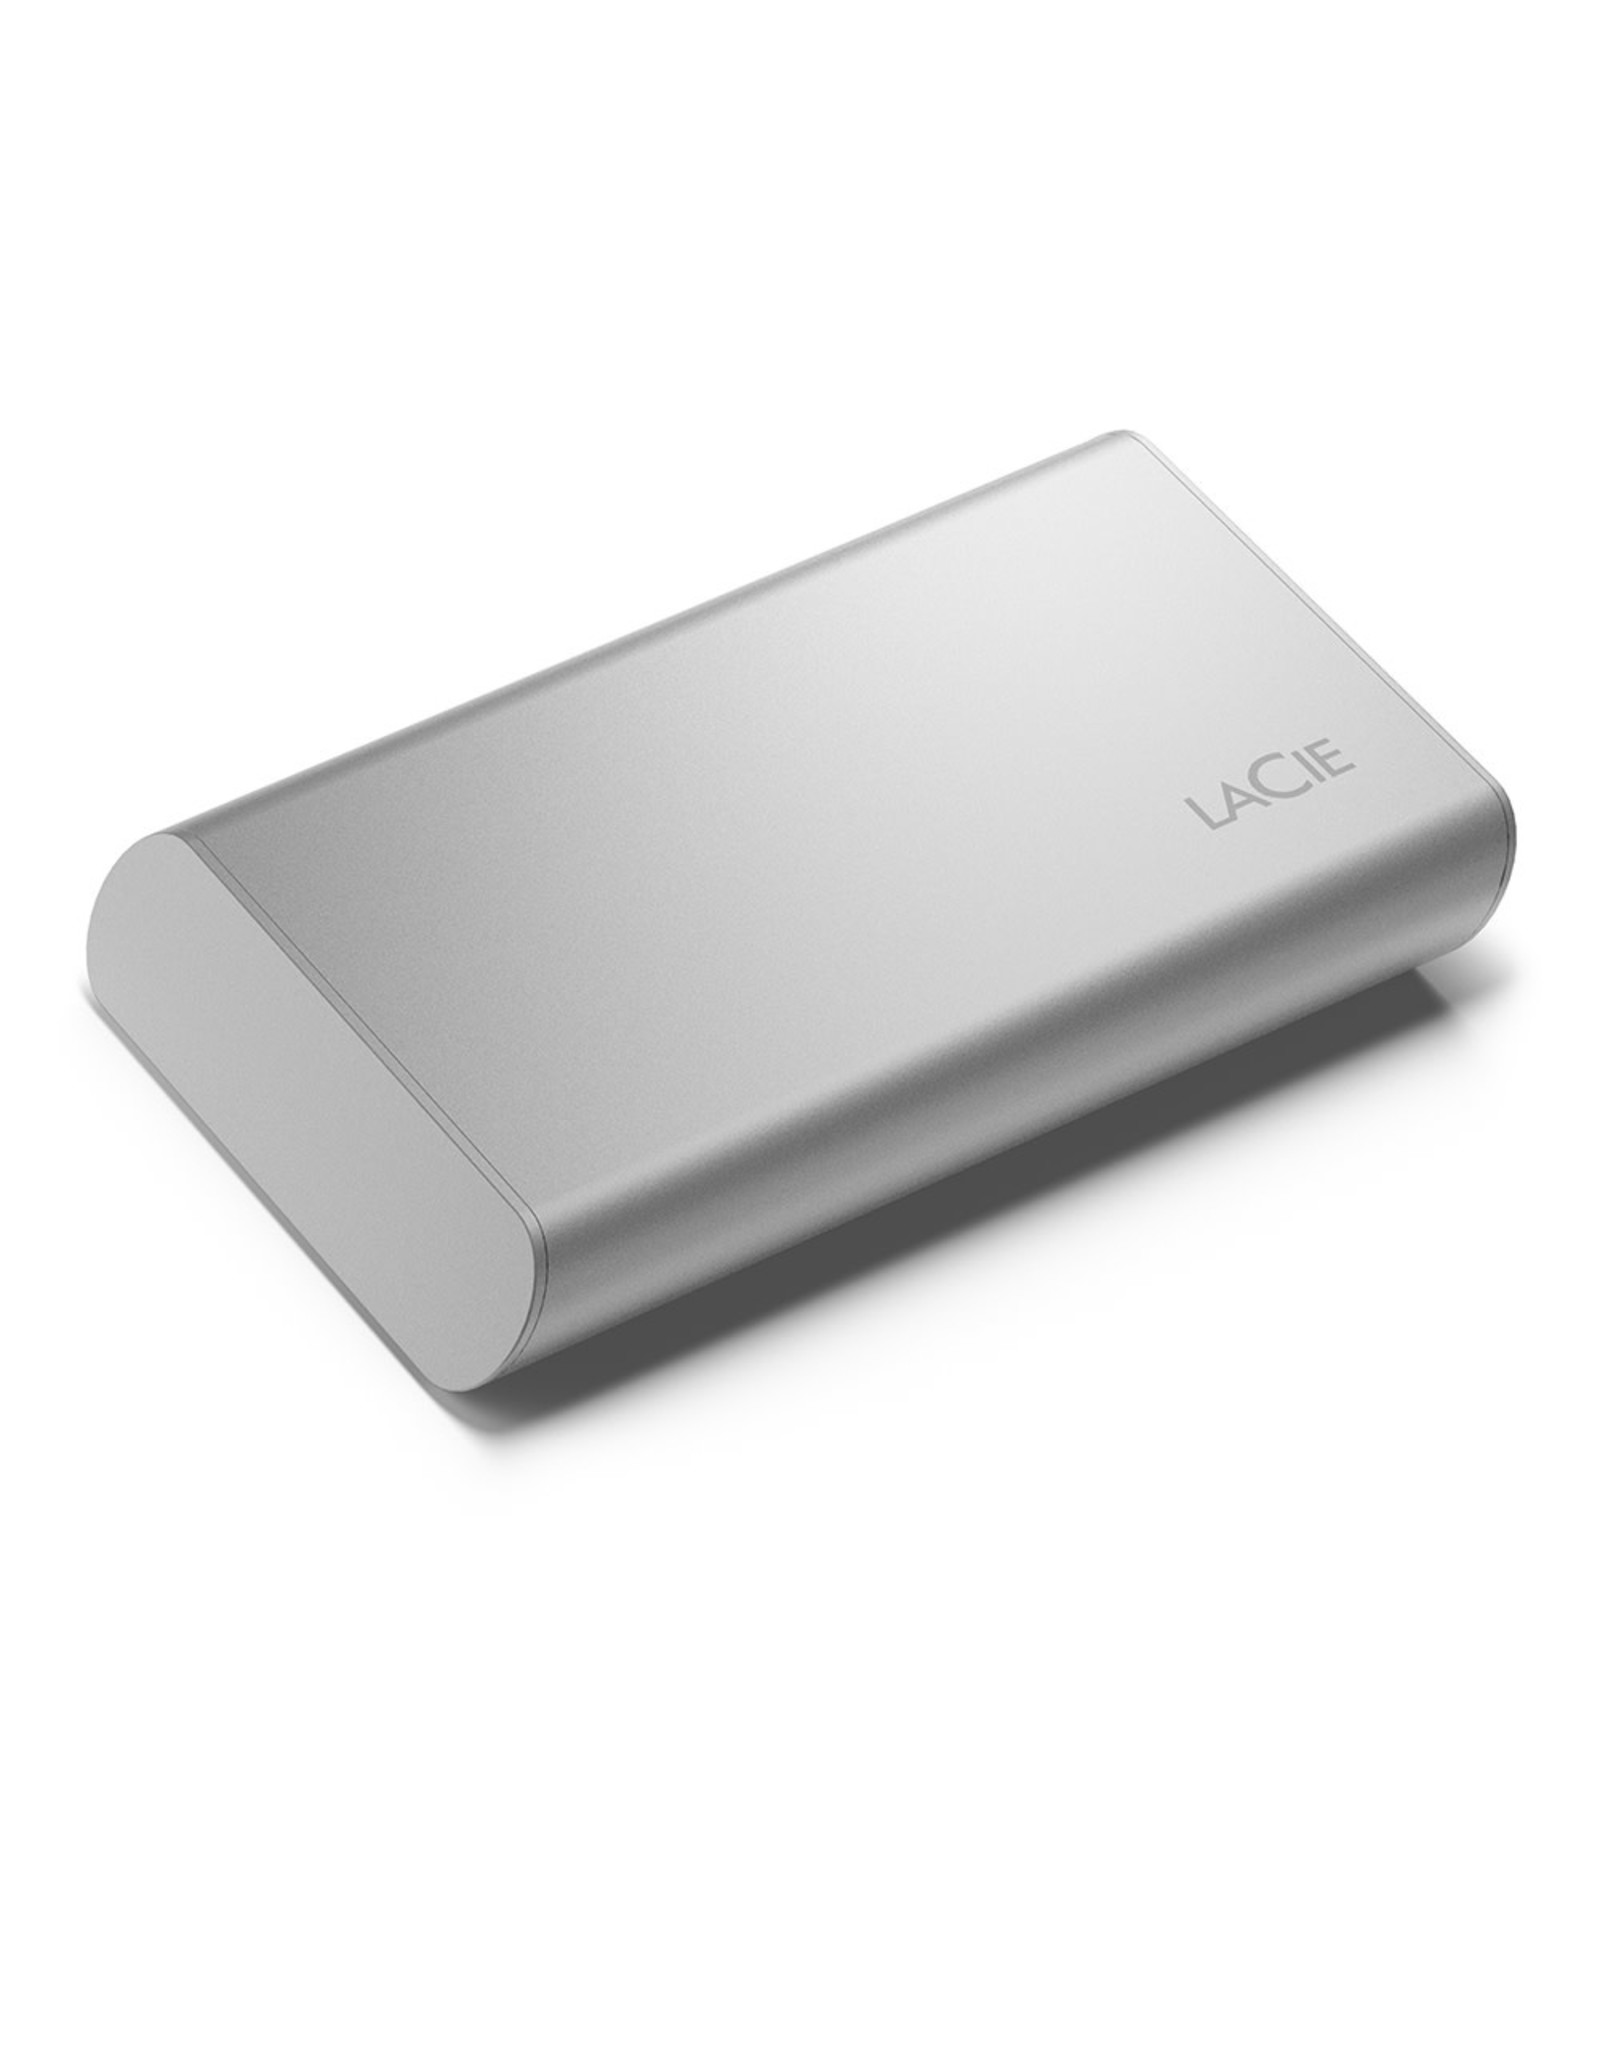 Lacie LaCie Portable SSD